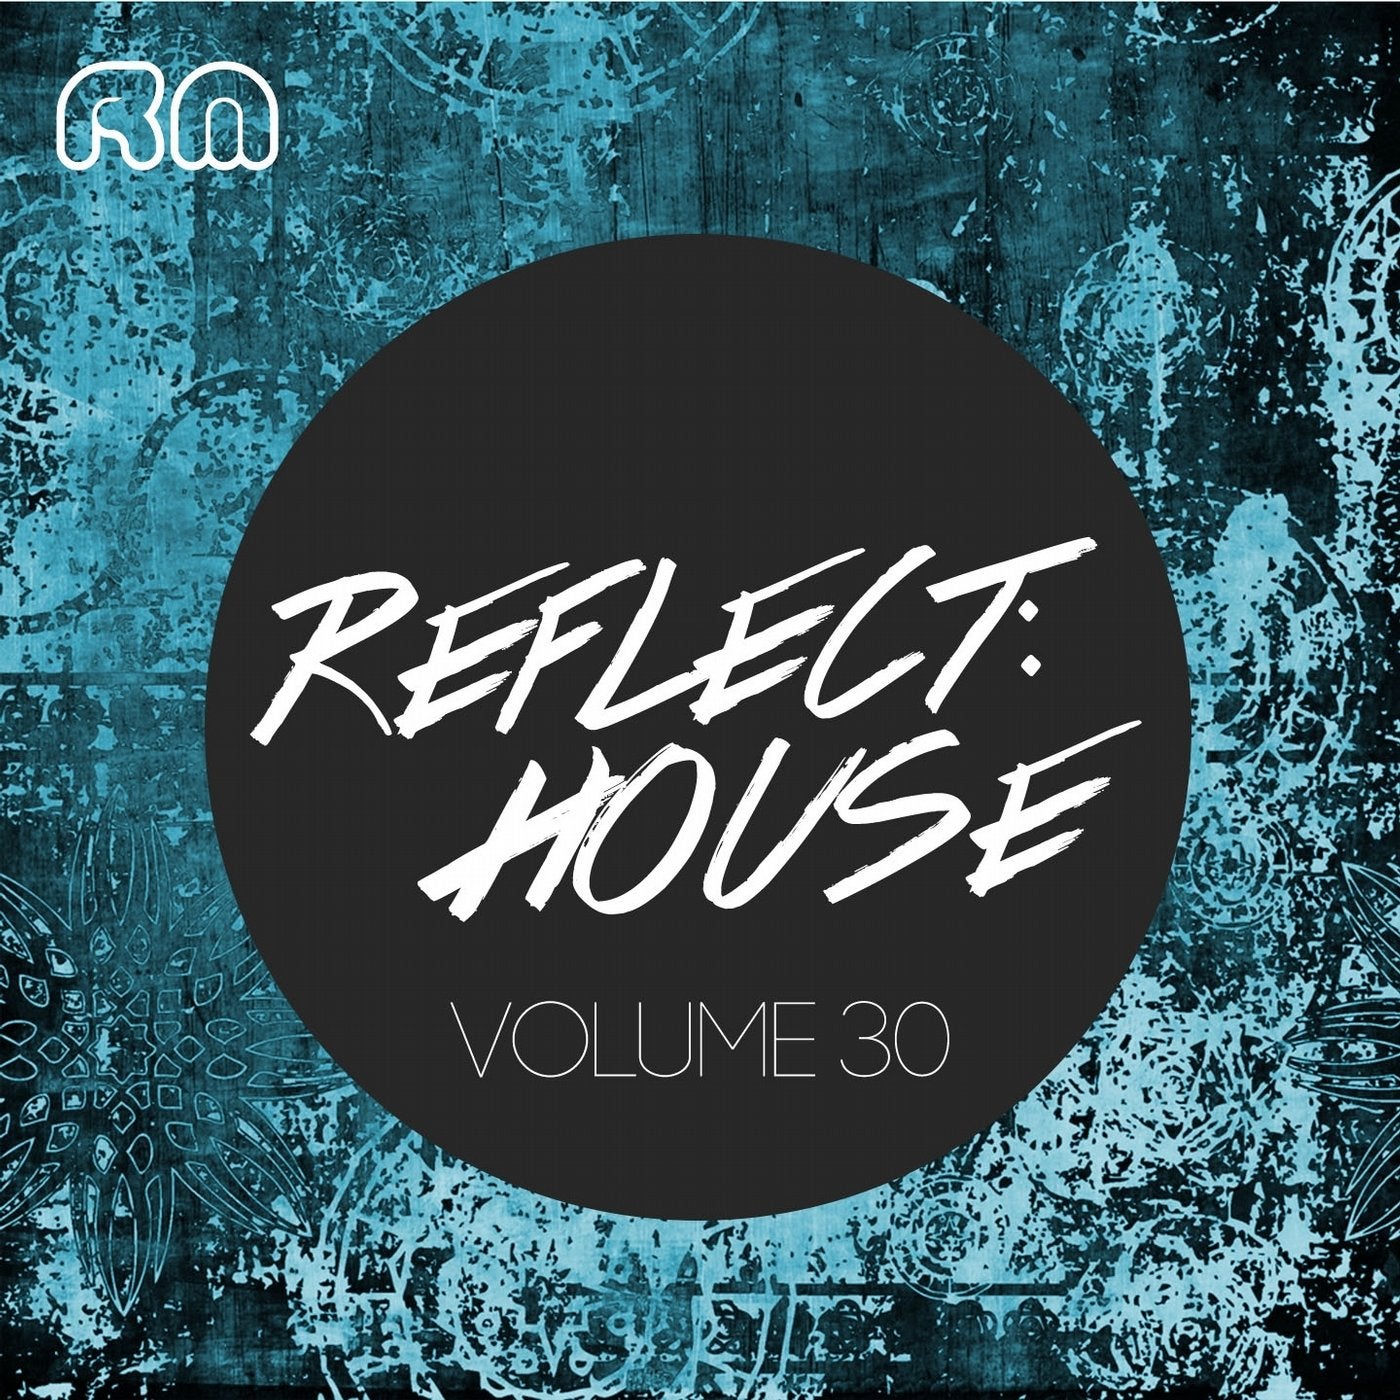 Reflect:House, Vol. 30